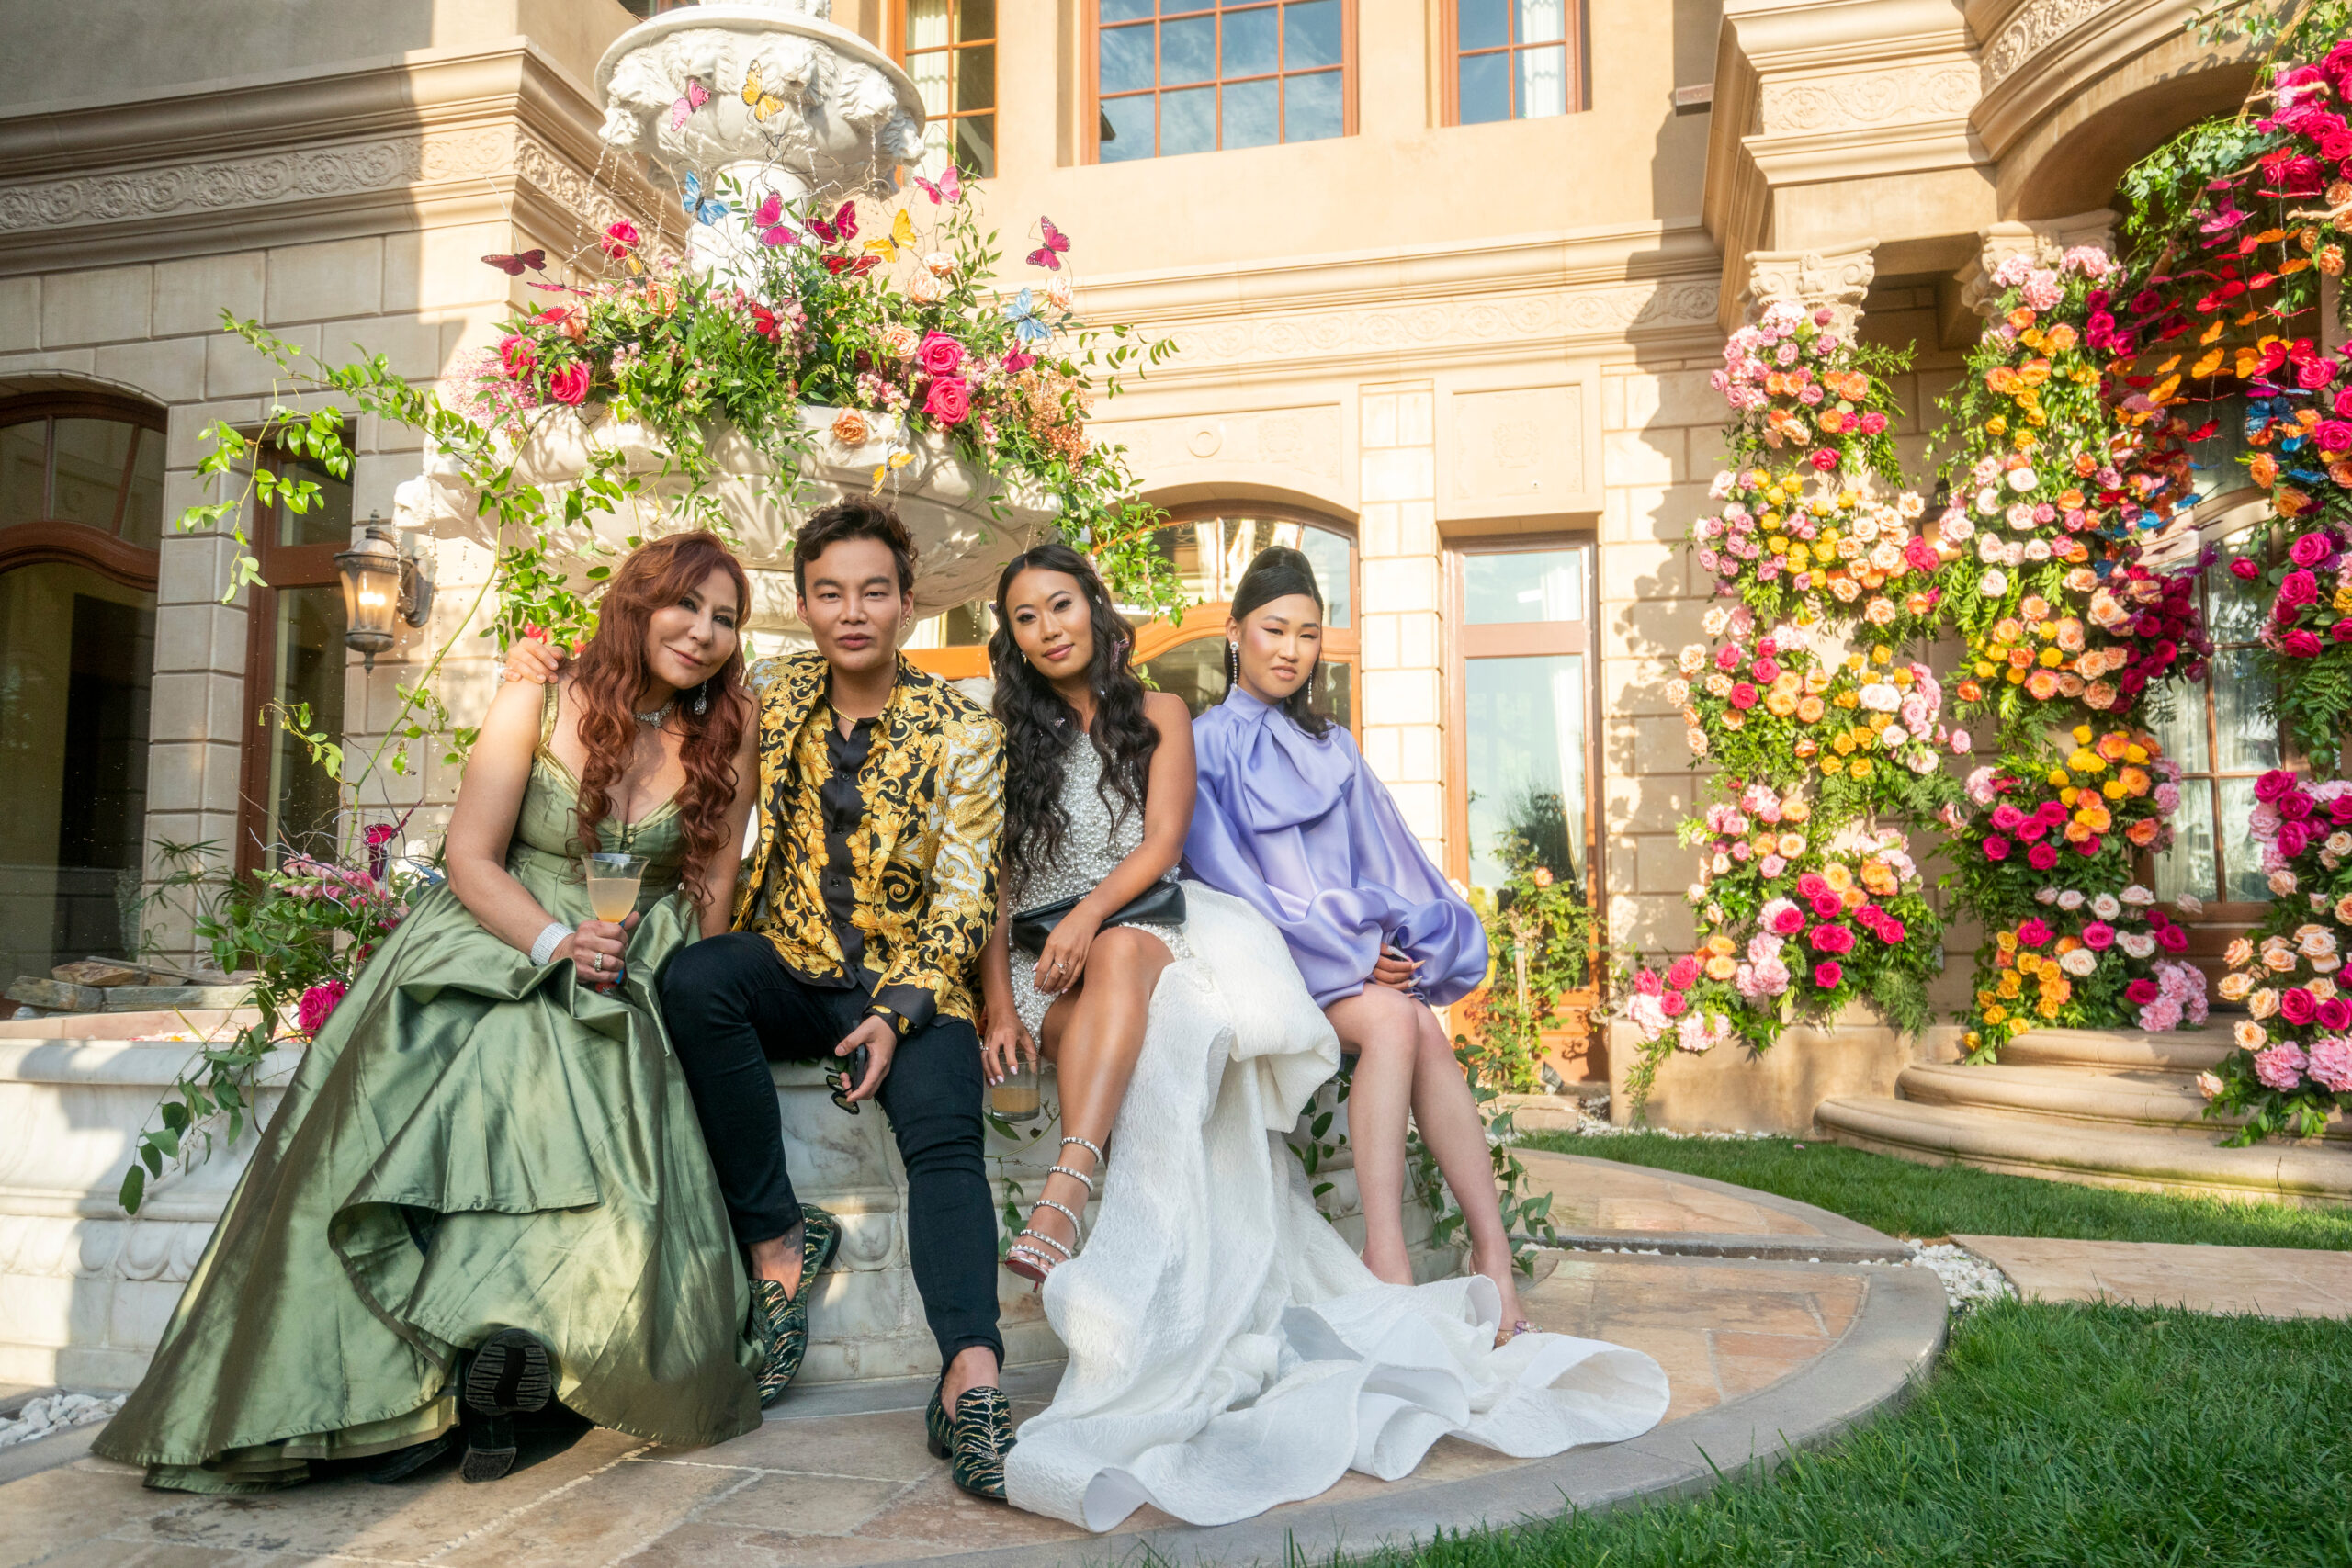 Bling Empire' Cast Instagram Accounts: Mimi, Dorothy, Anna, Kim